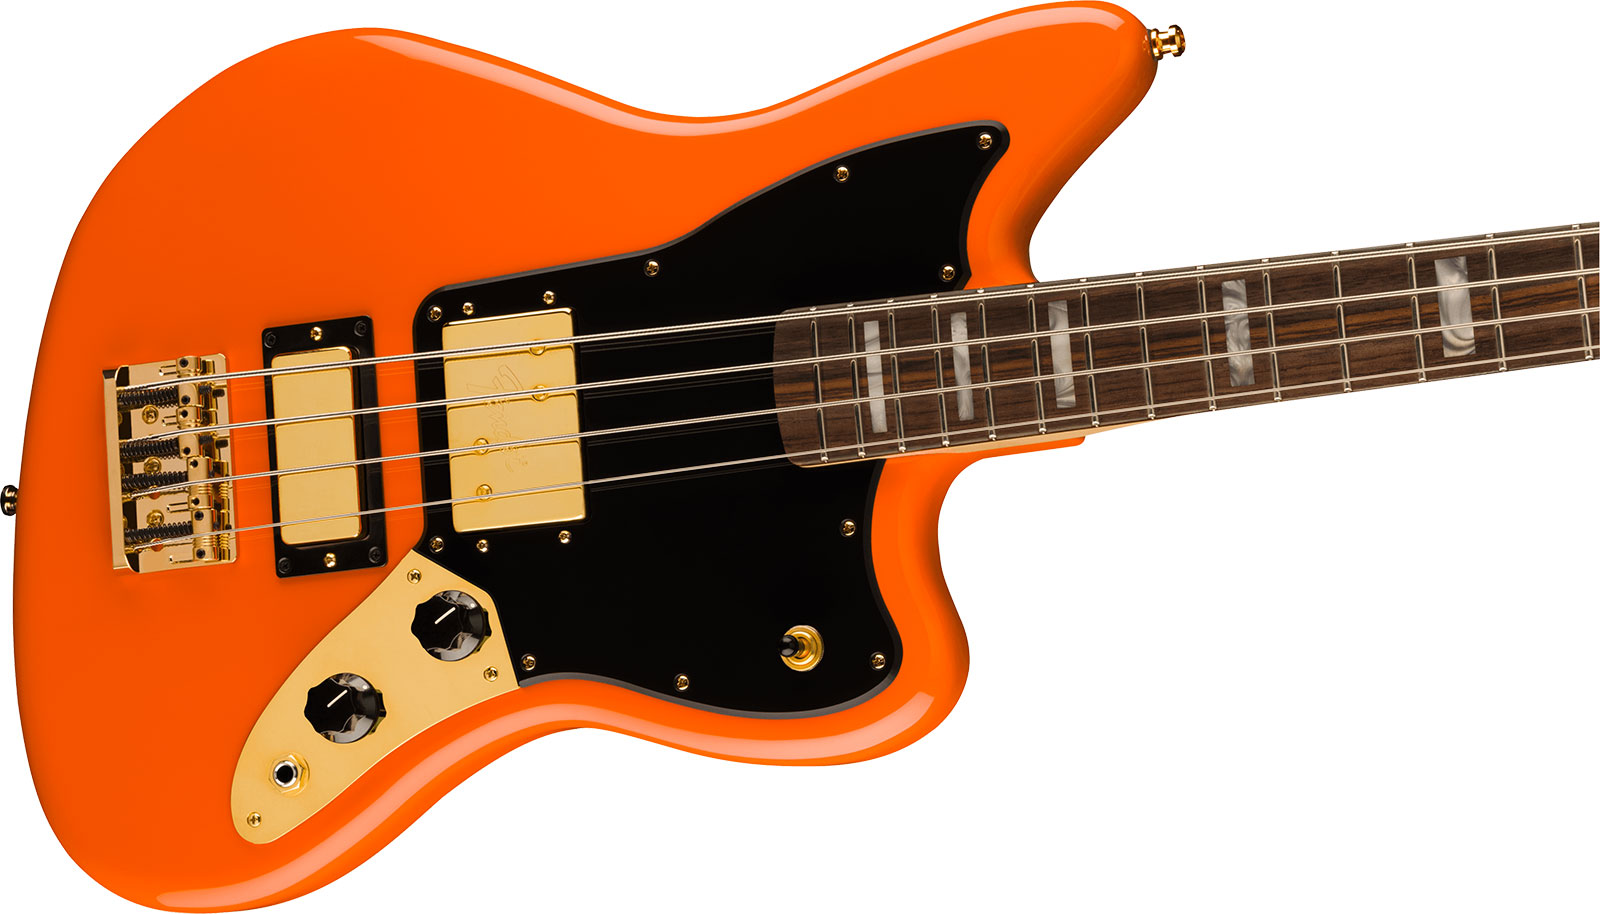 Fender Mike Kerr Jaguar Ltd Mex Signature Rw - Tiger's Blood Orange - Solid body elektrische bas - Variation 2